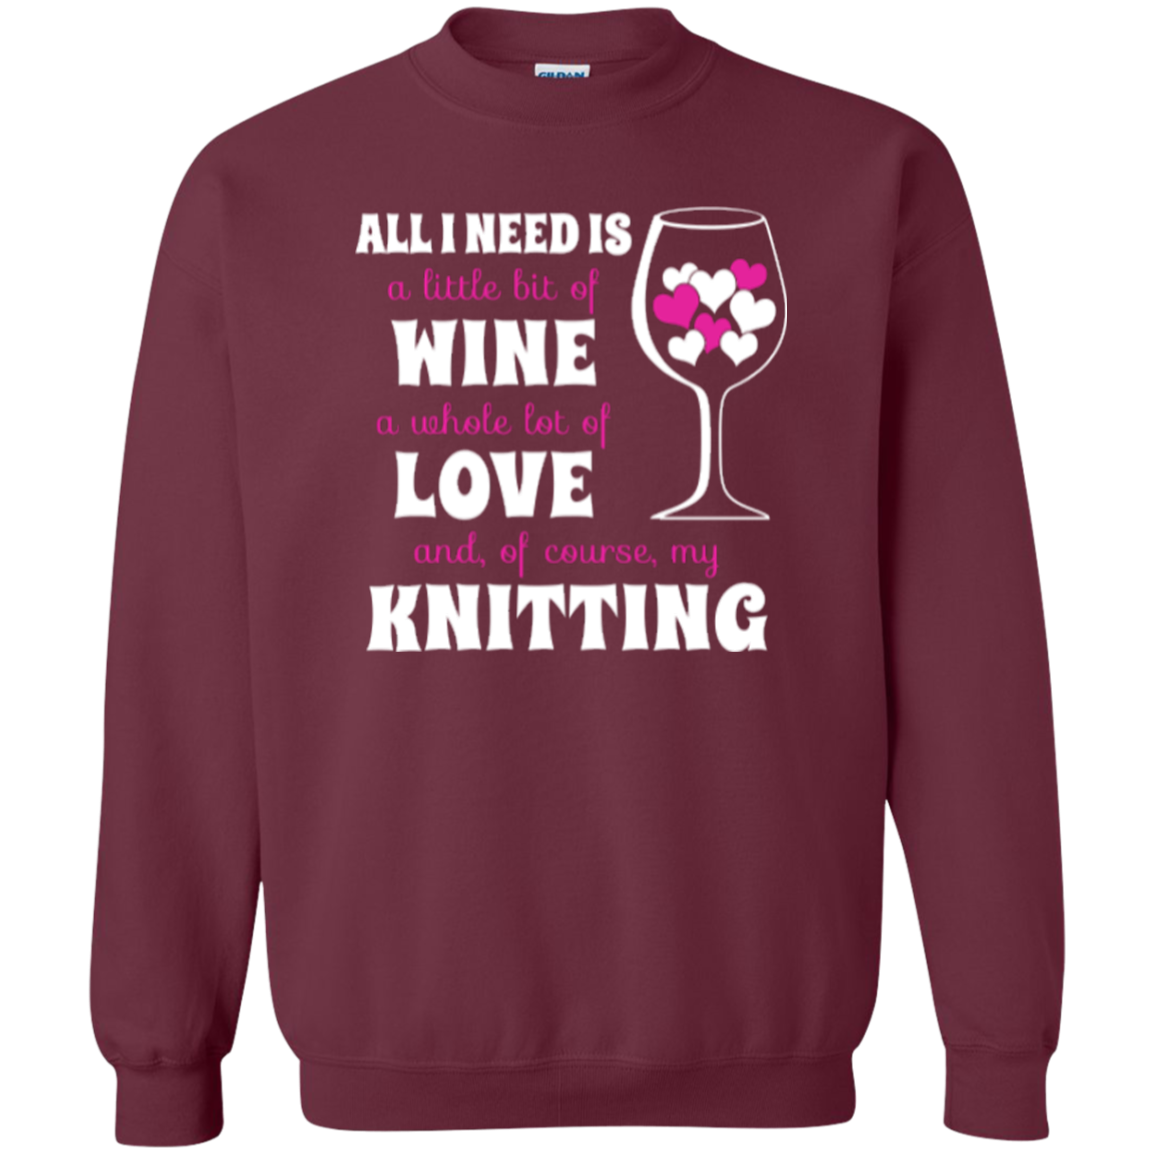 All I Need is Wine-Love-Knitting Crewneck Sweatshirt - Crafter4Life - 3